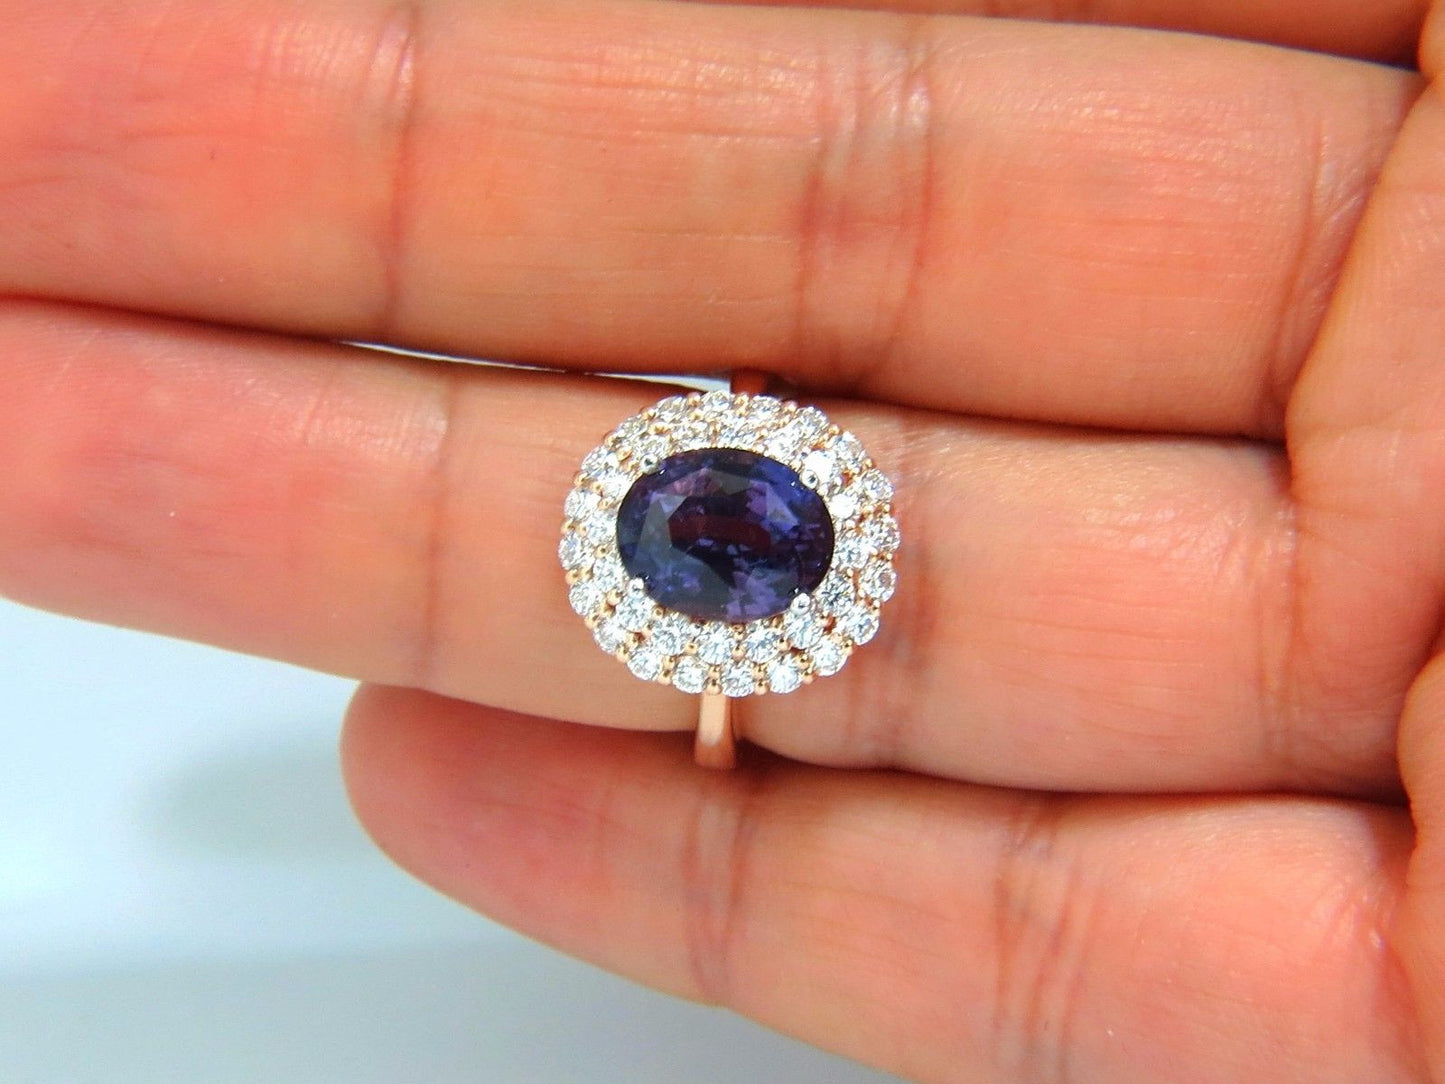 GIA Certified 6.41ct Natural Vivid purple sapphire diamonds ring